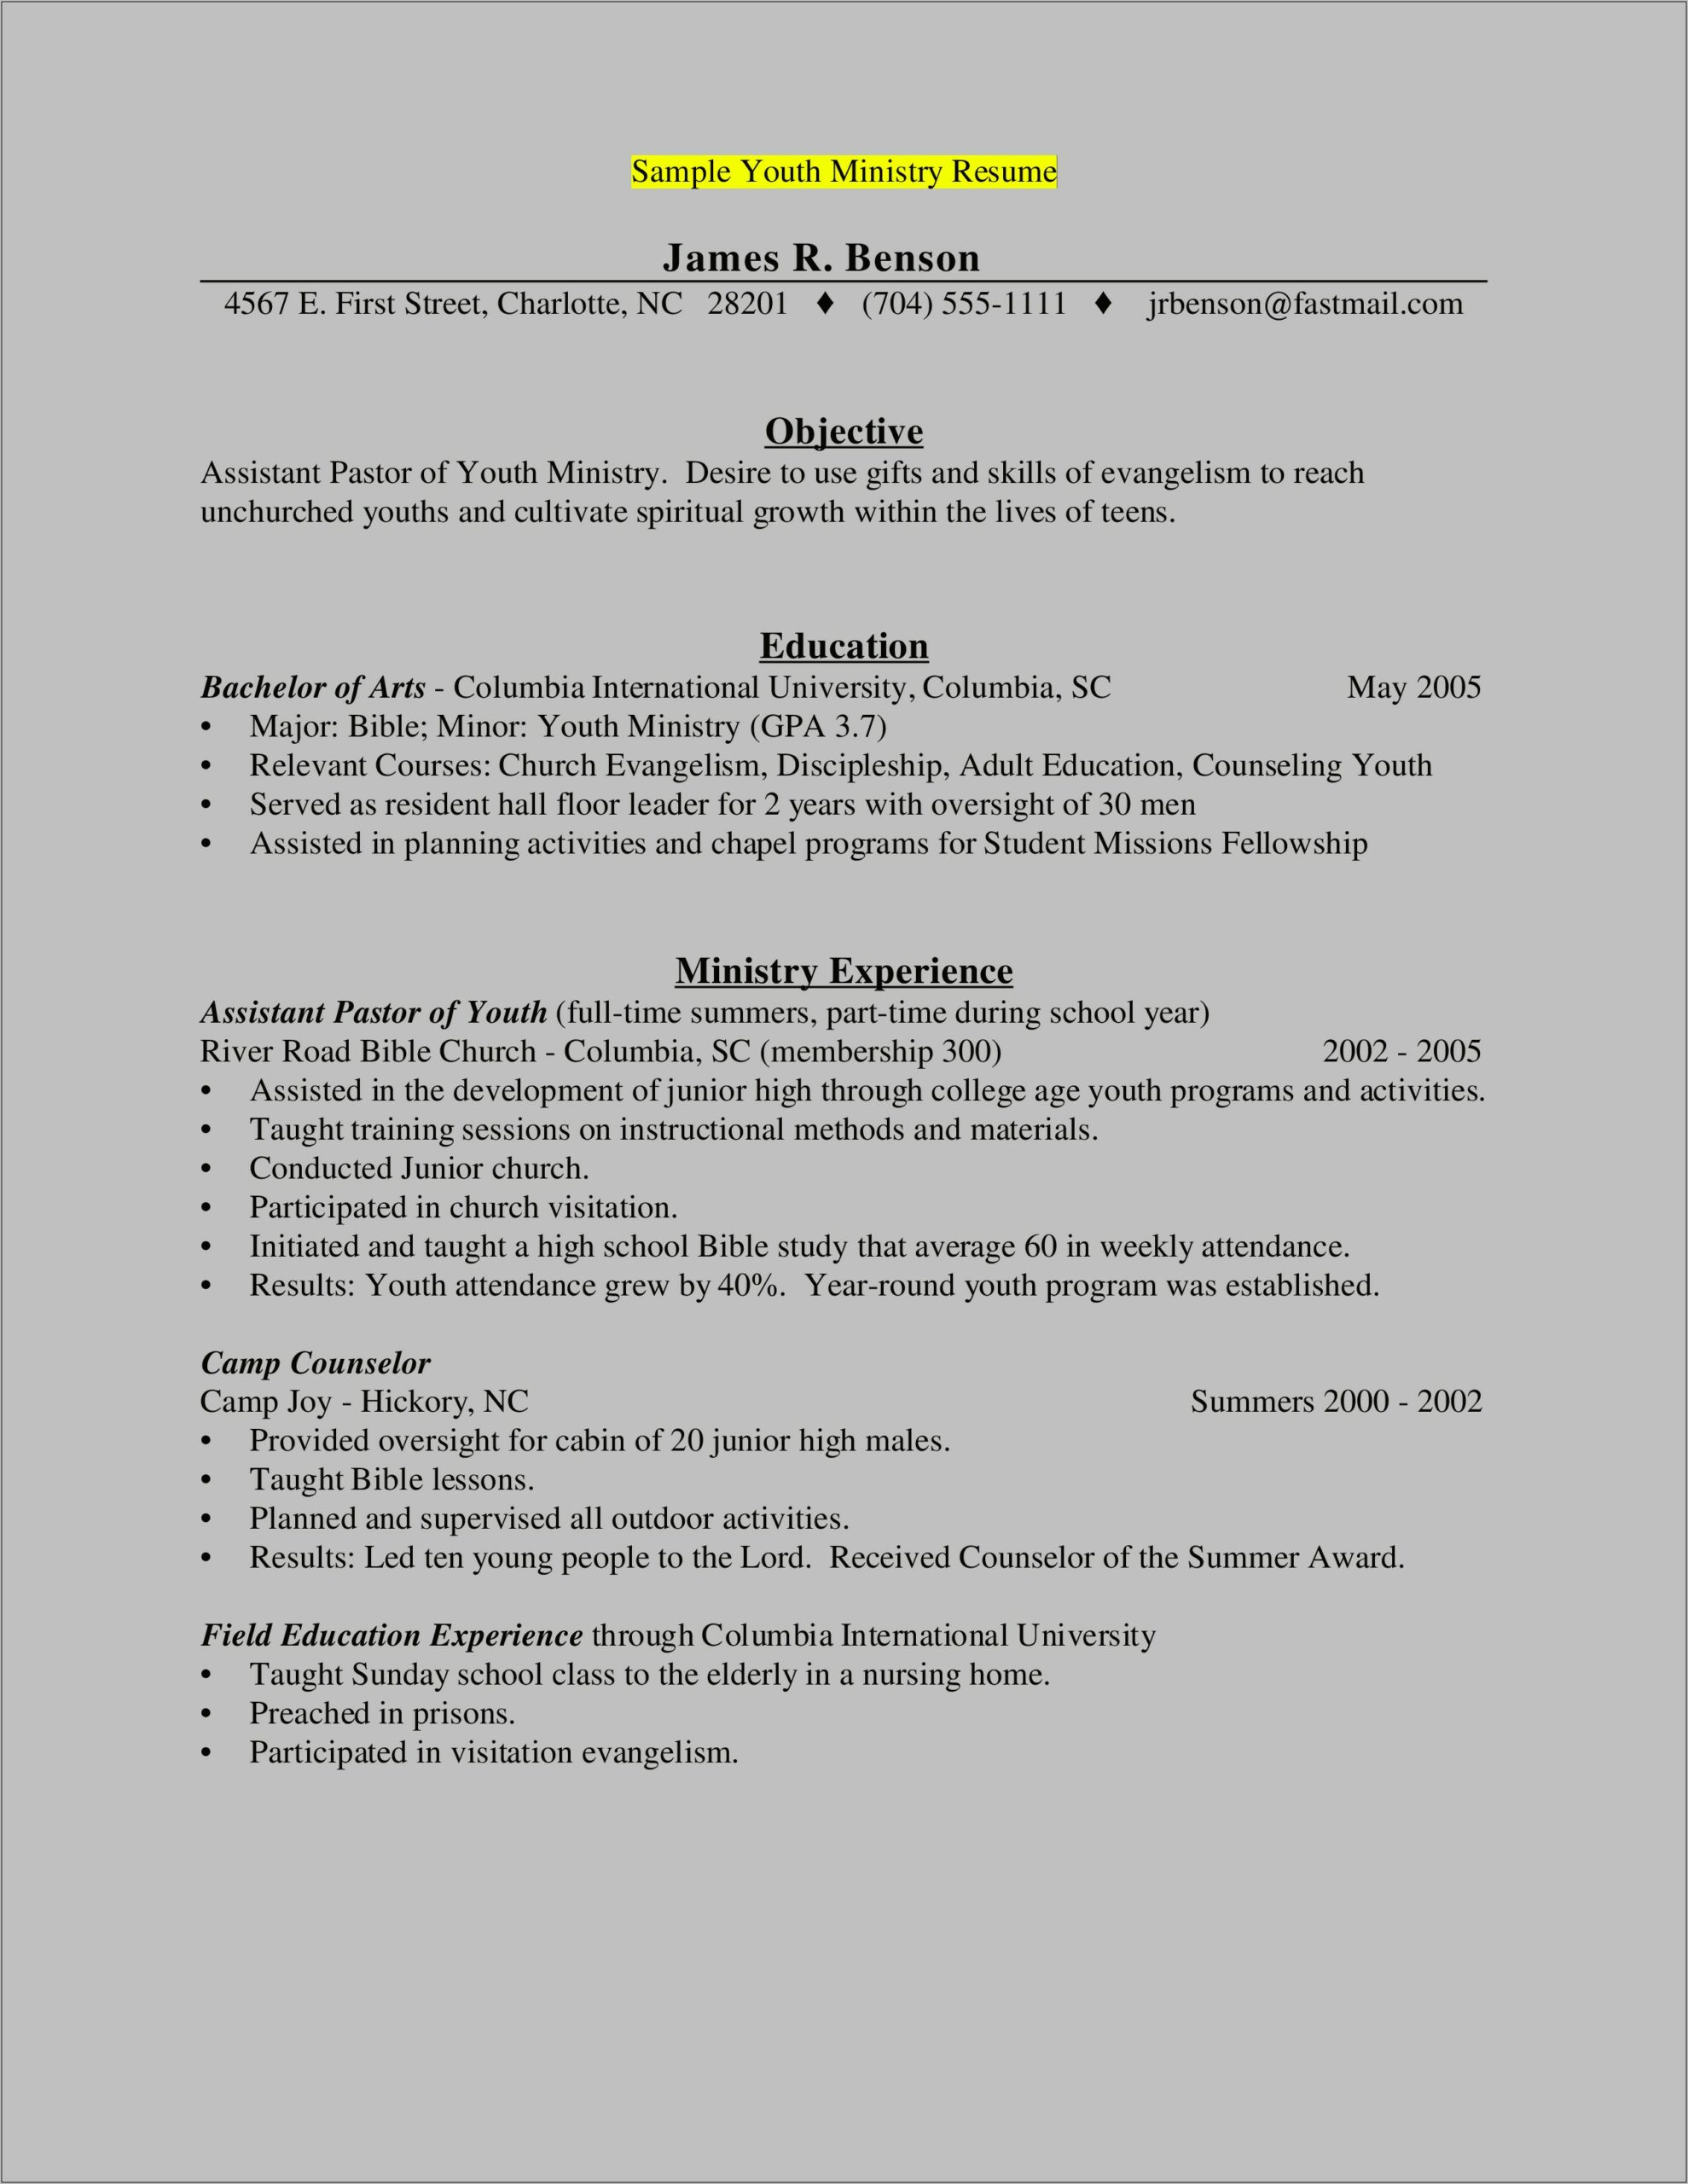 Engineering Summer Camp Counselor Job Description For Resume